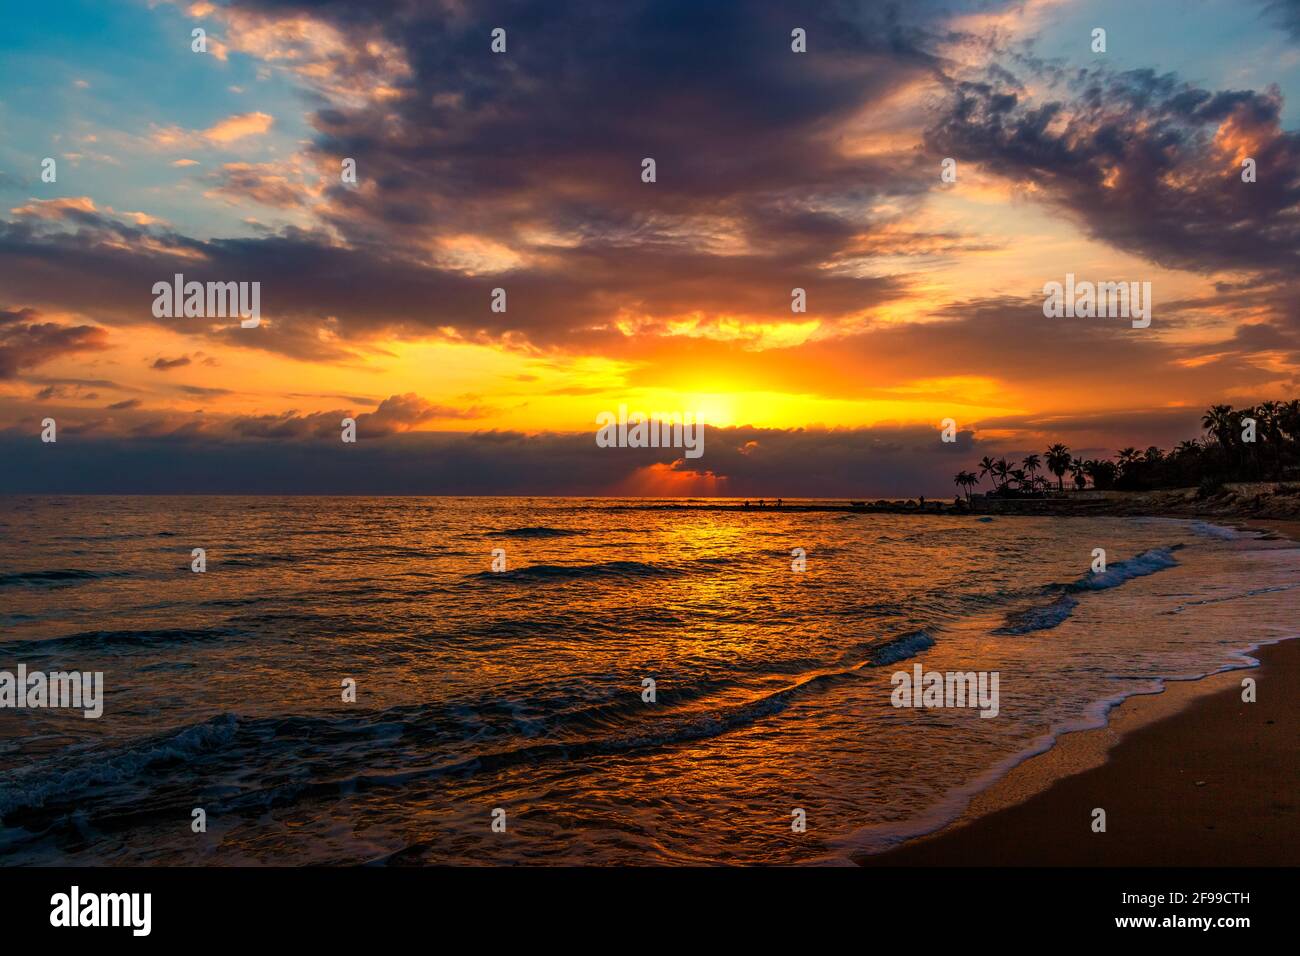 Sunset over ocean. Dramatic sky. Stock Photo